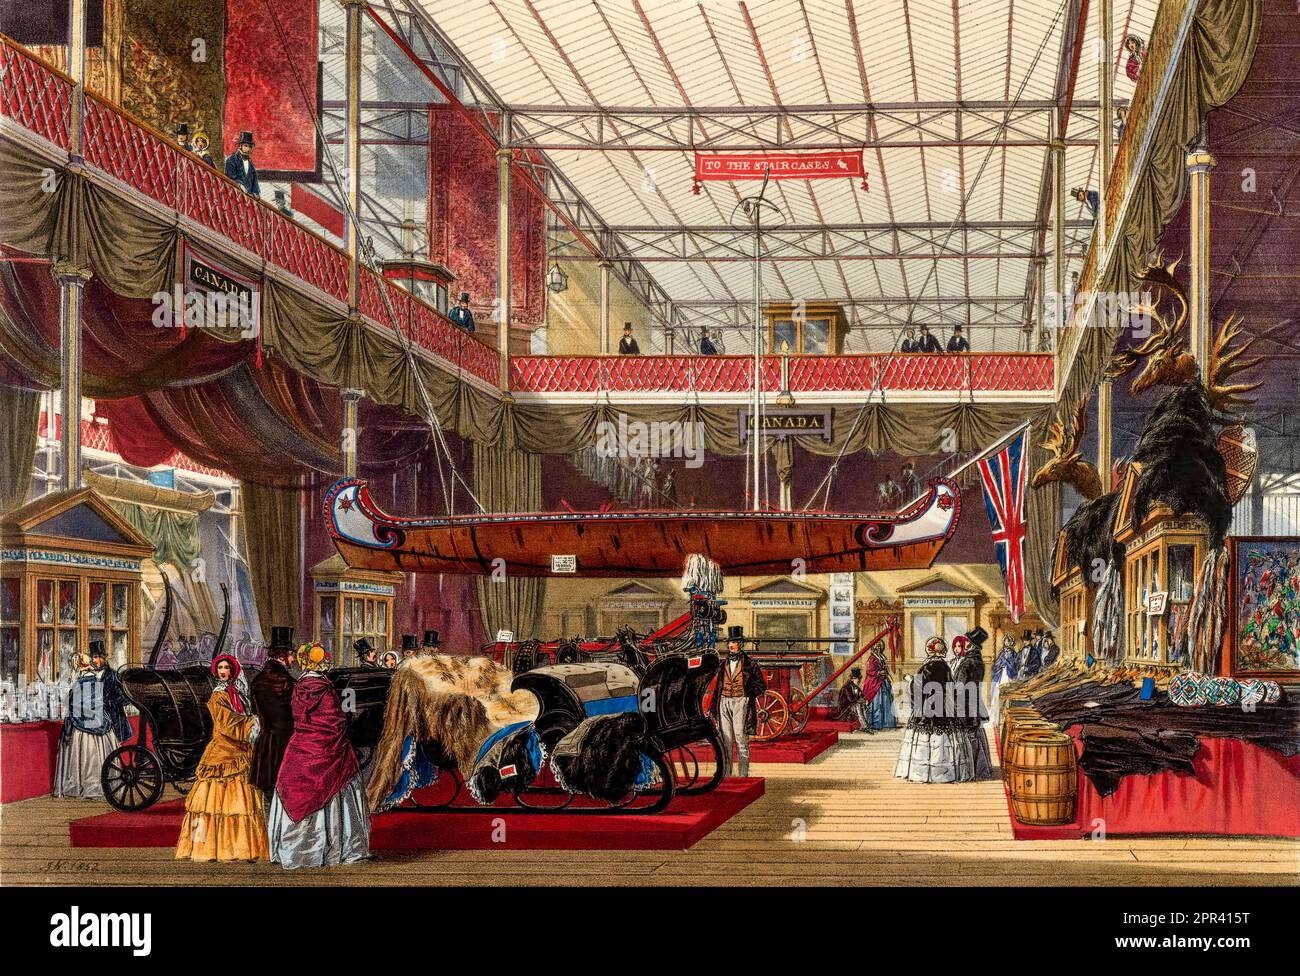 Canada Exhibition in The Great Exhibition 1851 in London, England, Illustration von Joseph Nash, 1854 Stockfoto